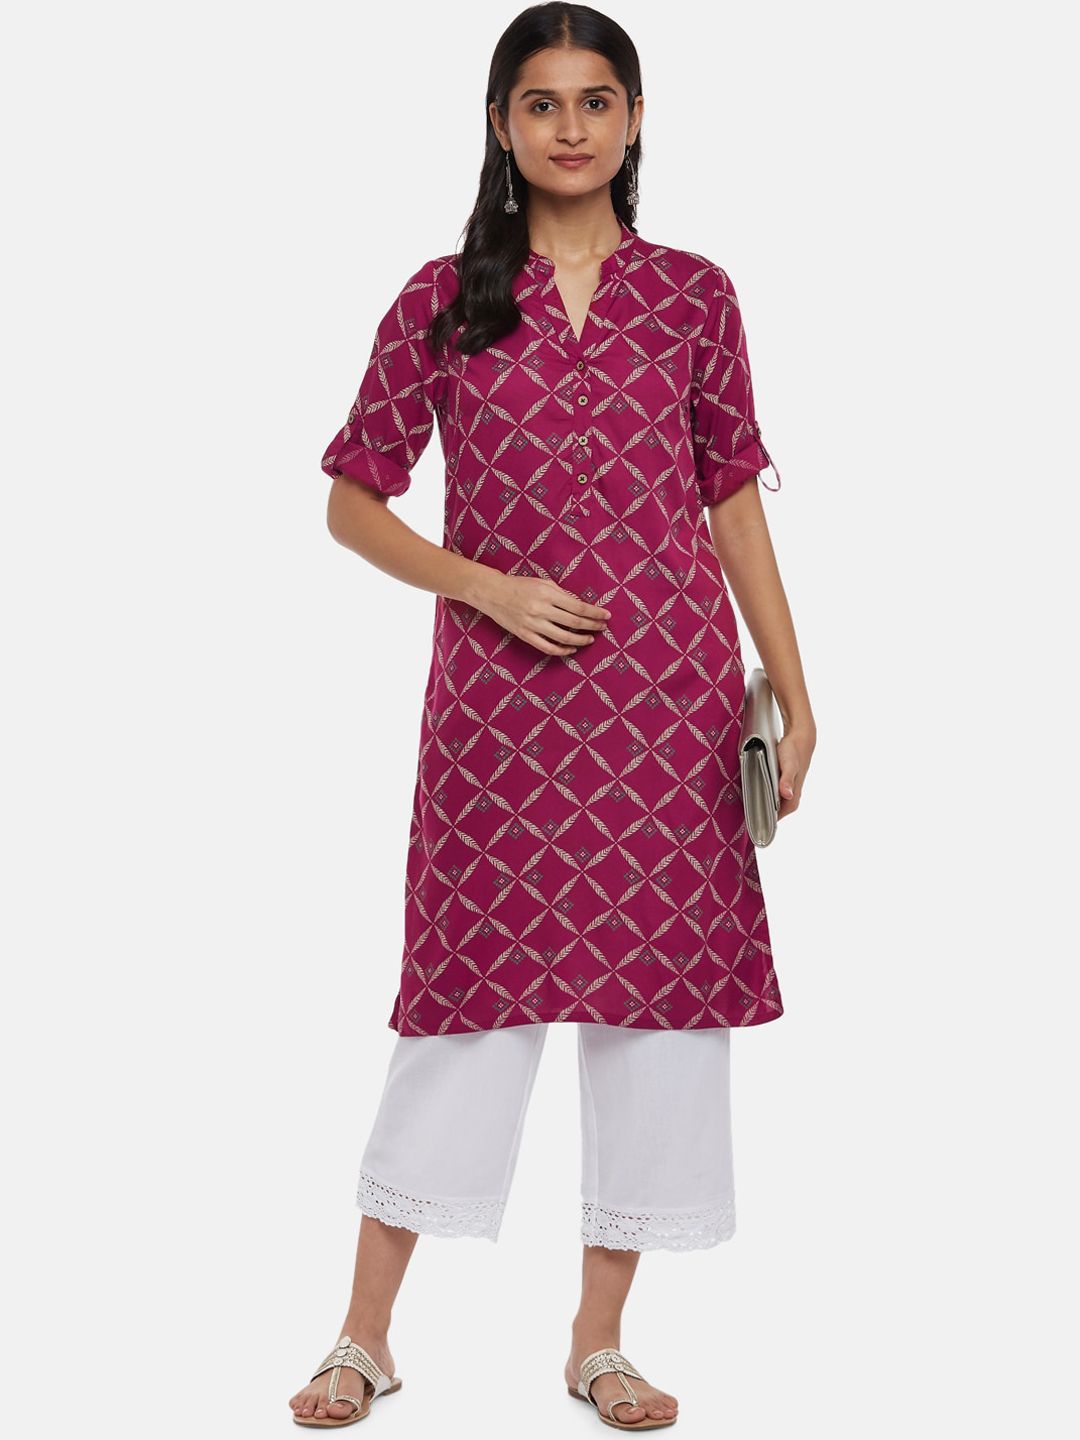 RANGMANCH BY PANTALOONS Women Pink Geometric Checked Thread Work Kurta Price in India